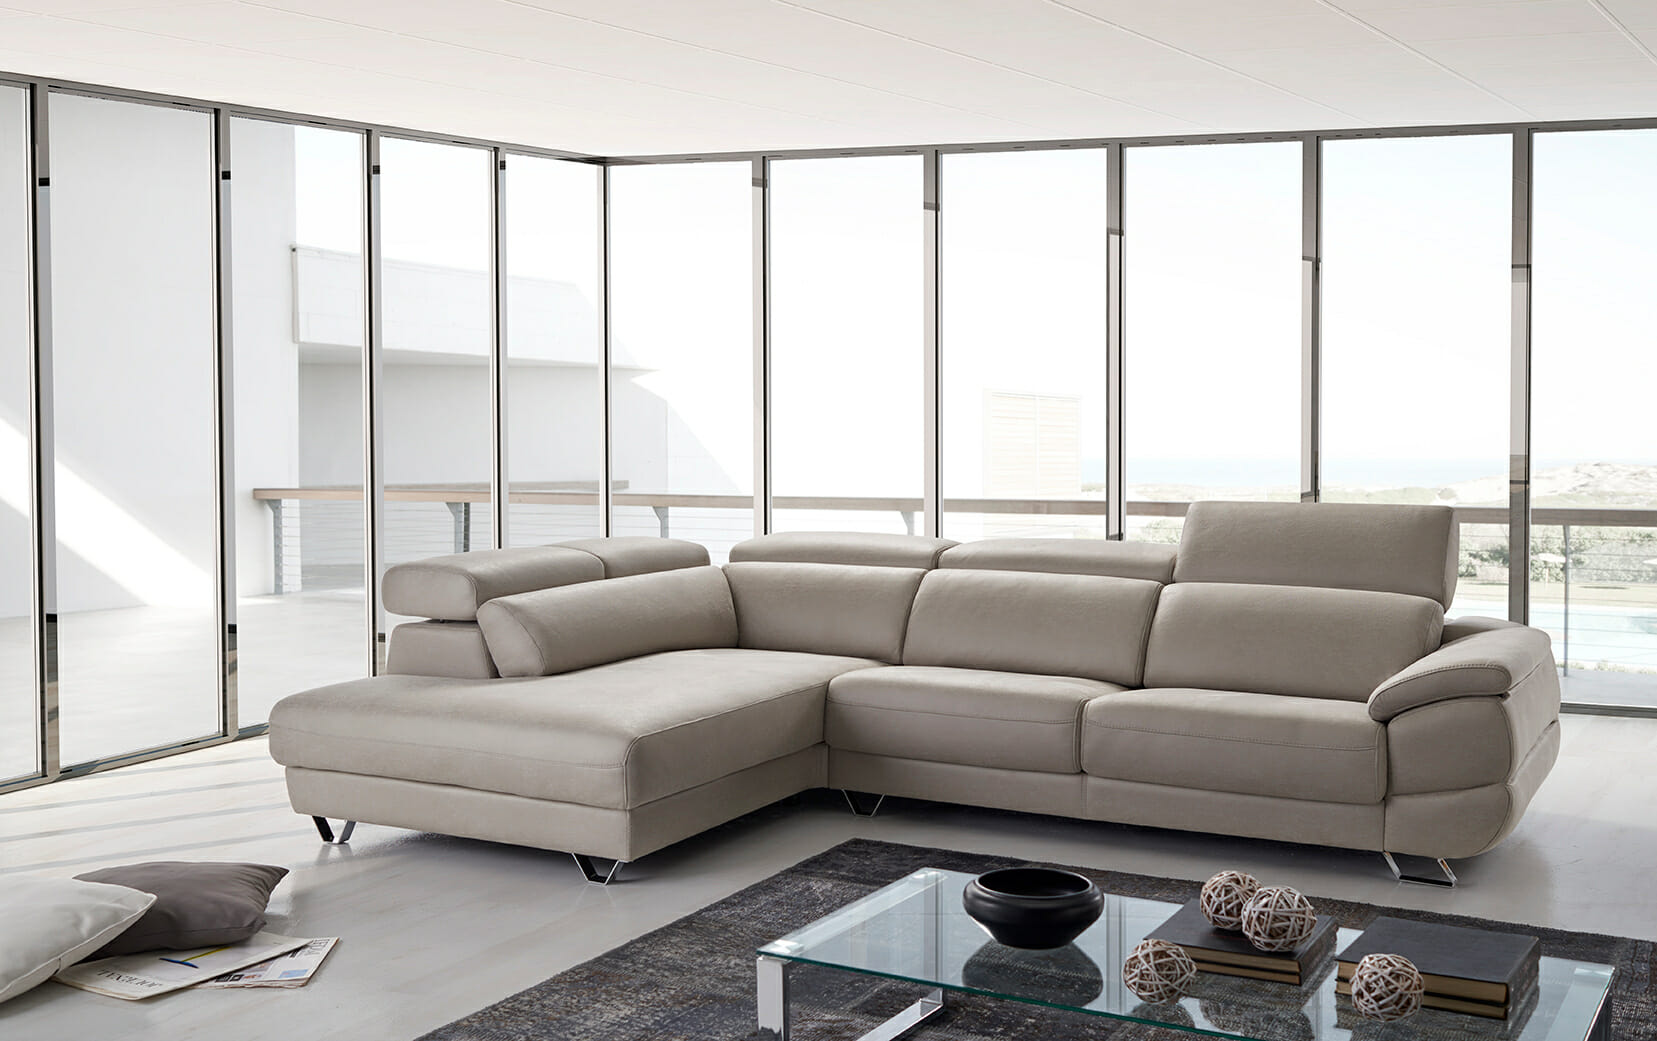 pedro-ortiz-dalmata-modular-sofa-with-chaise-longue